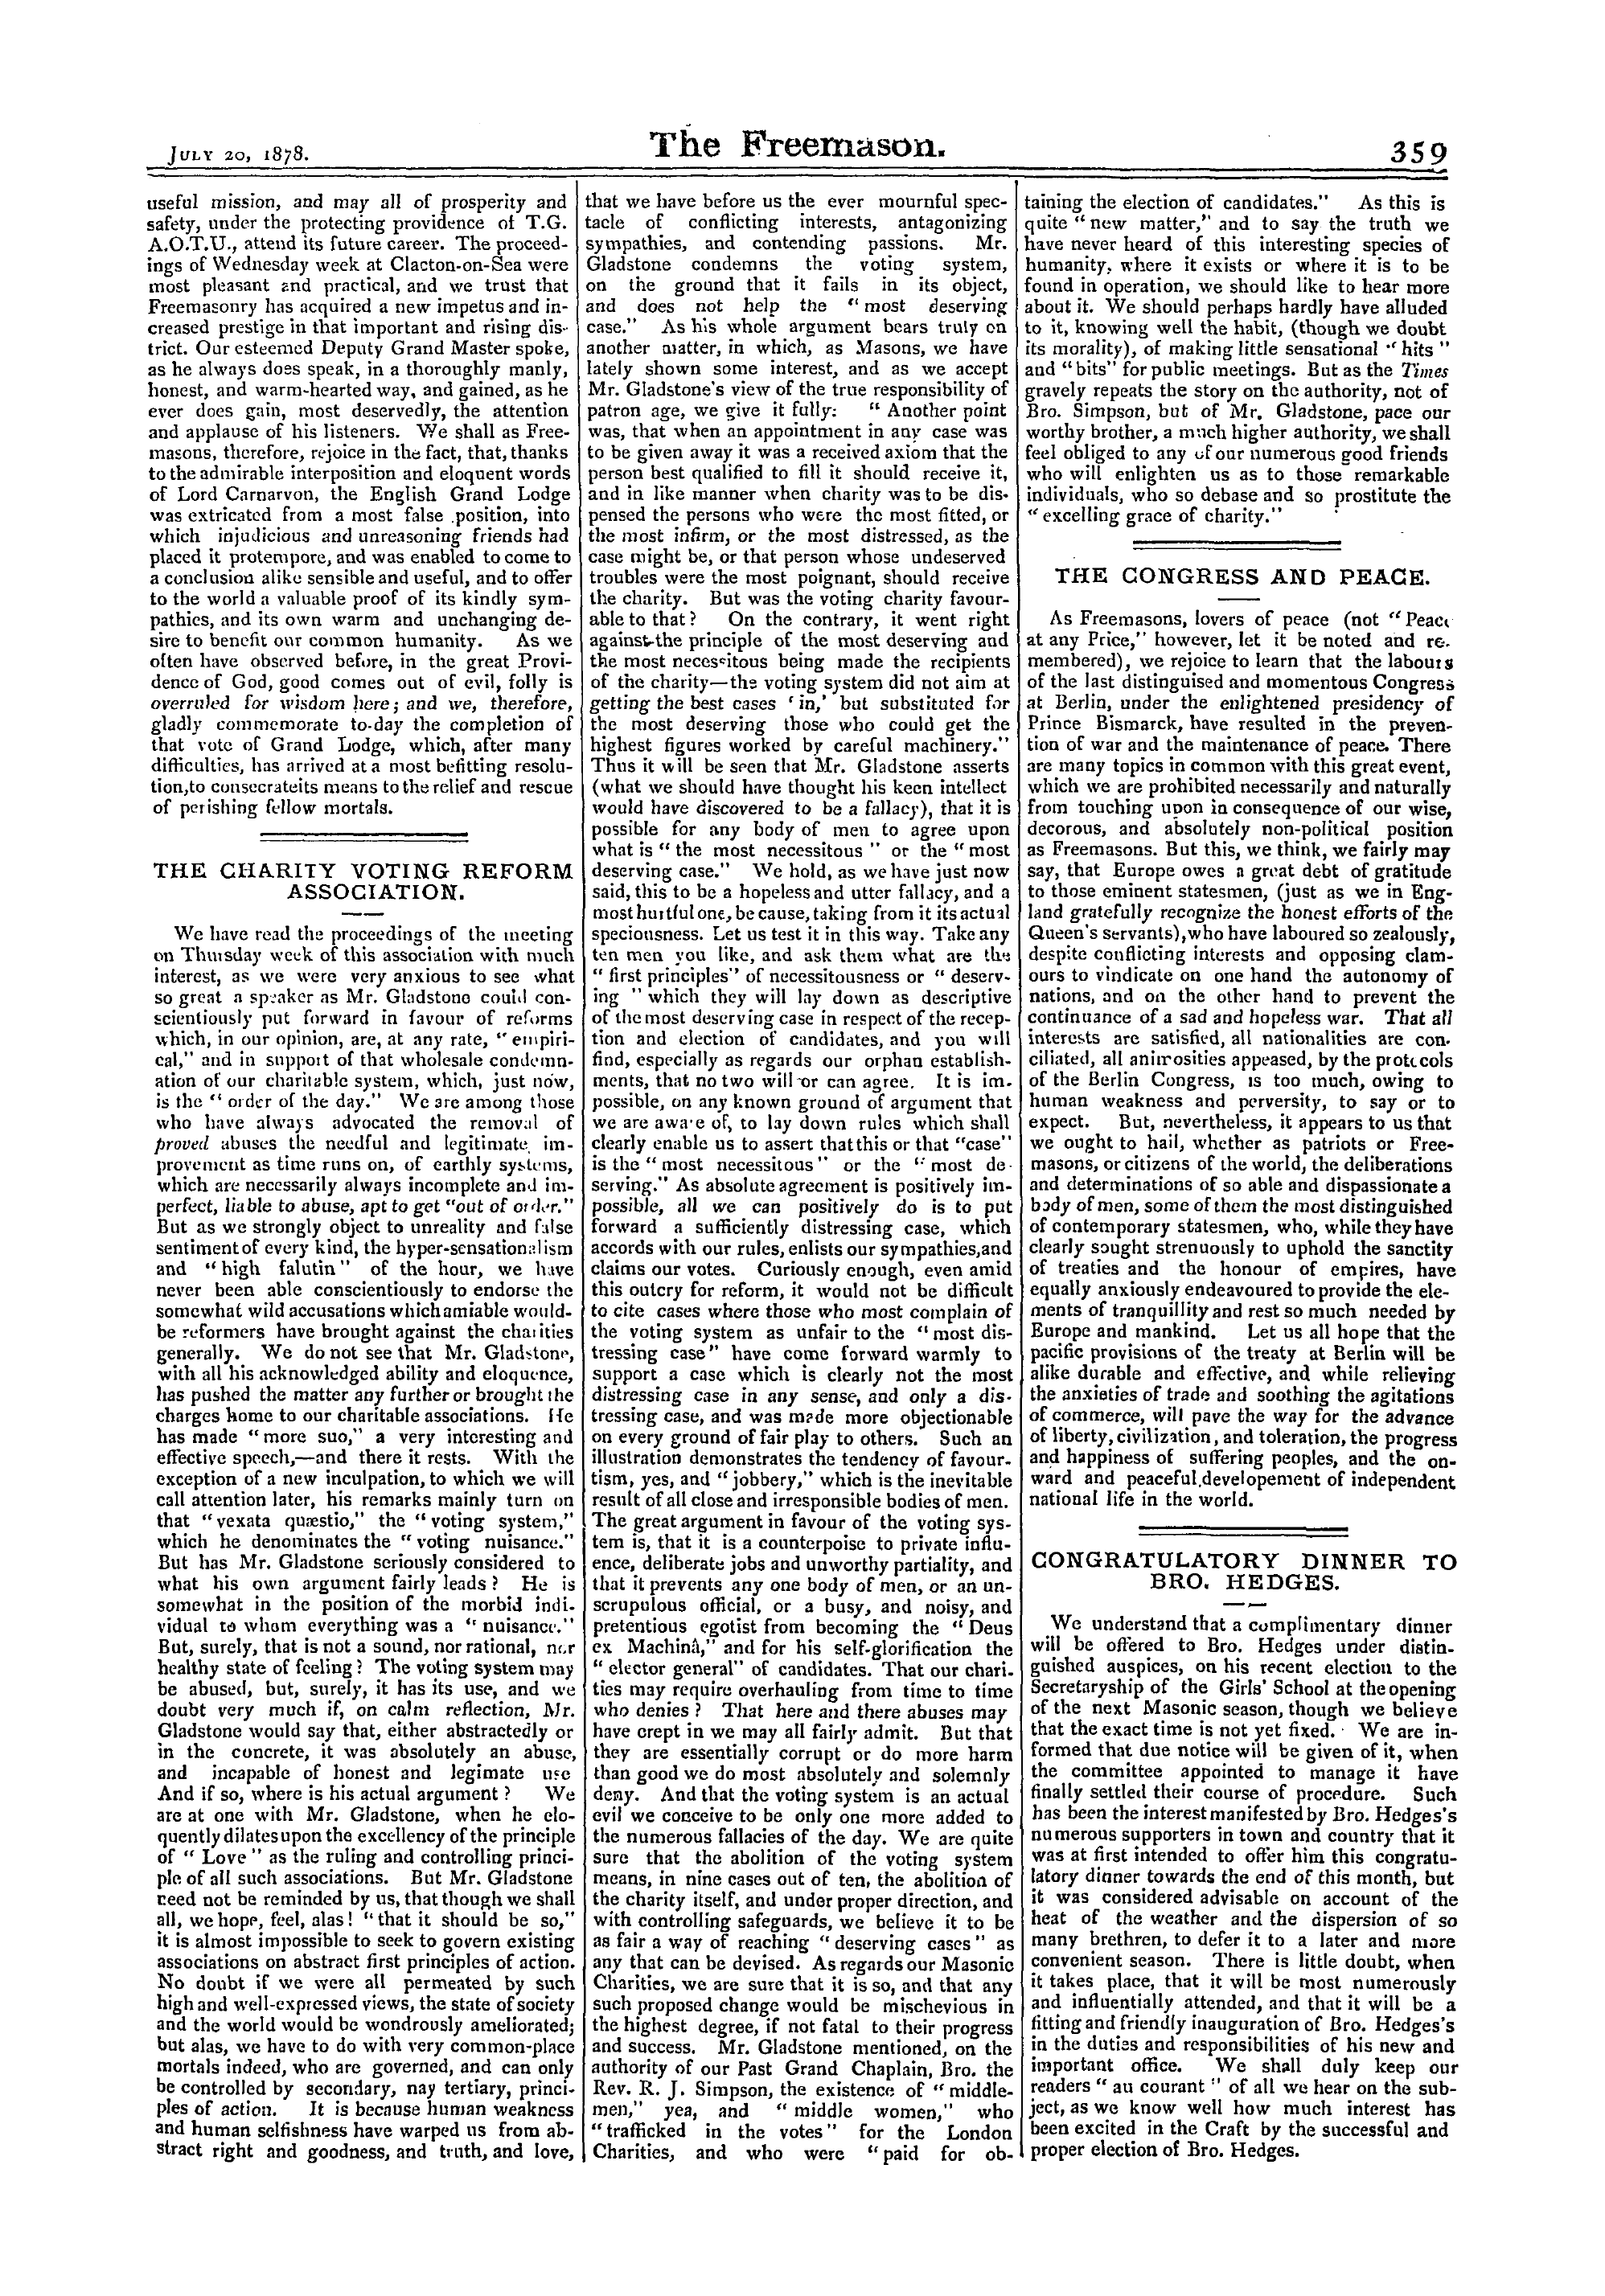 The Freemason: 1878-07-20: 7